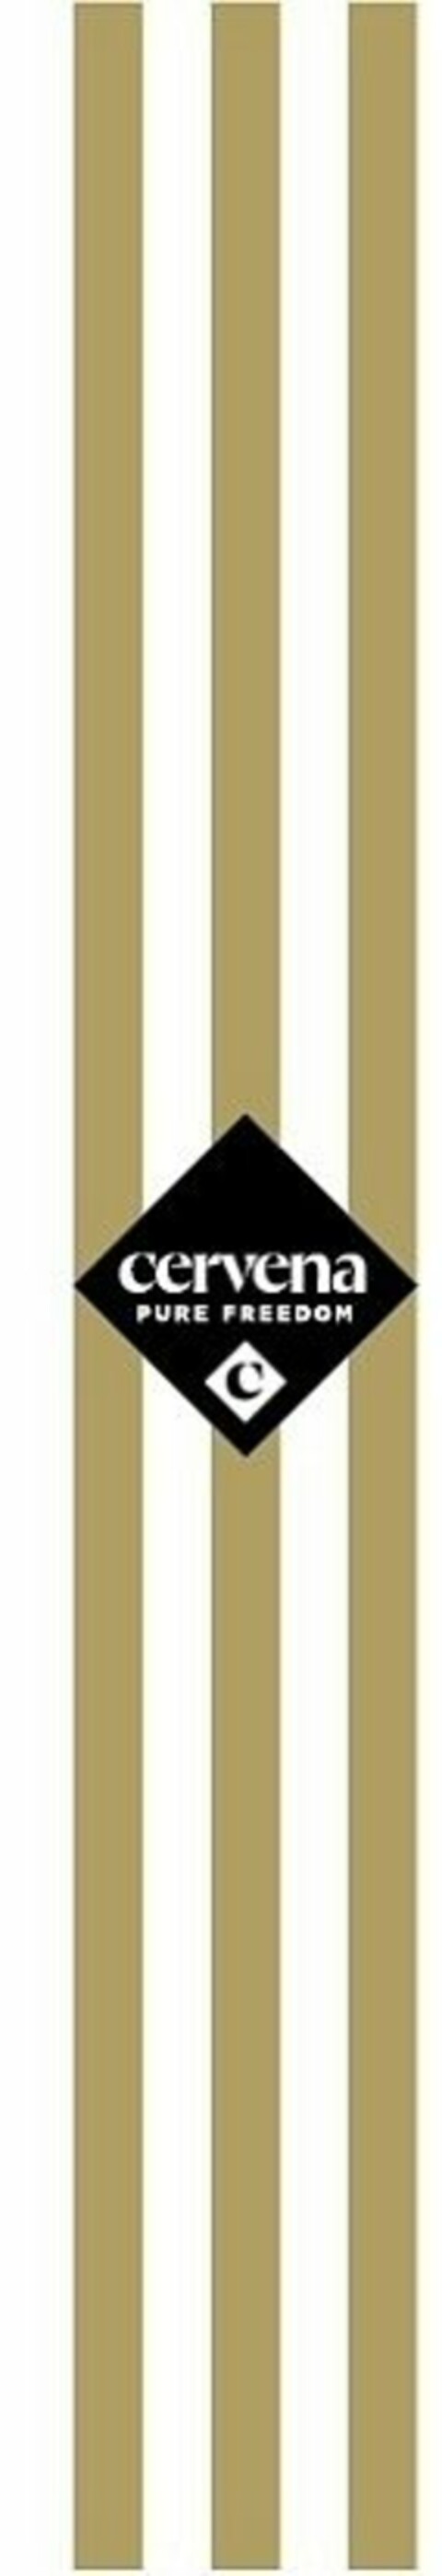 cervena PURE FREEDOM C Logo (WIPO, 03/23/2018)